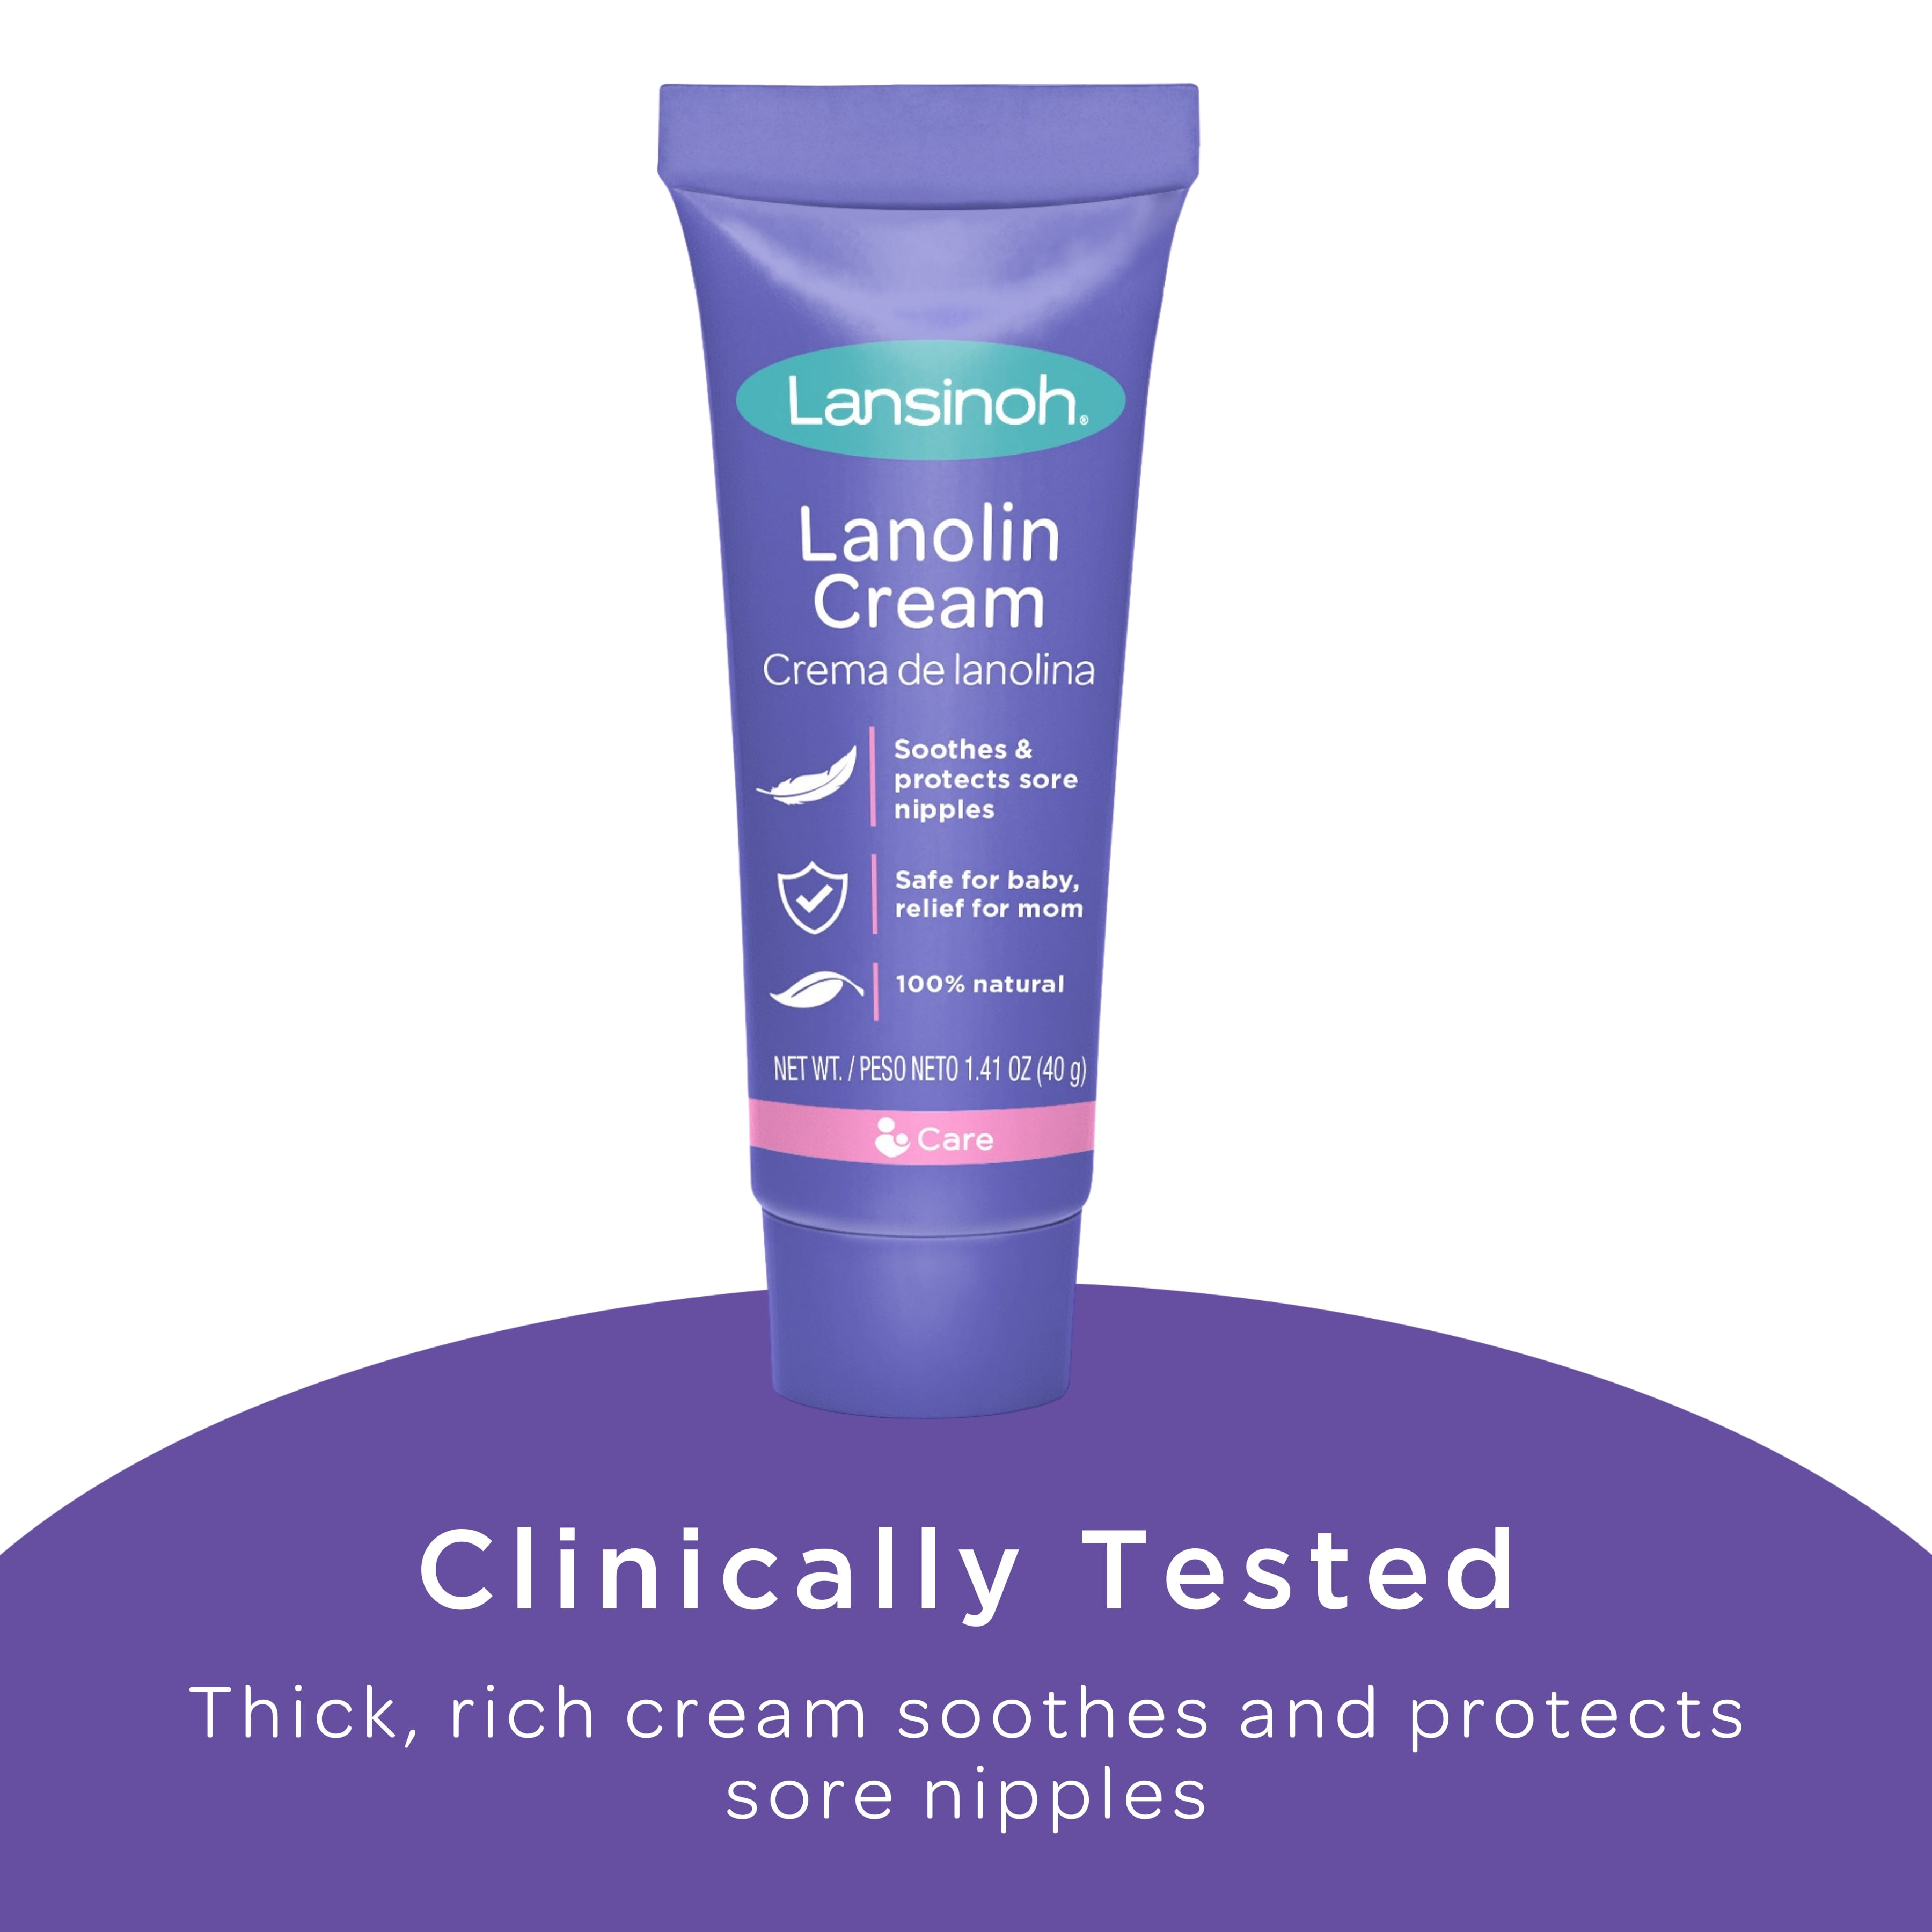 Save on Lansinoh Lanolin Nipple Cream Order Online Delivery